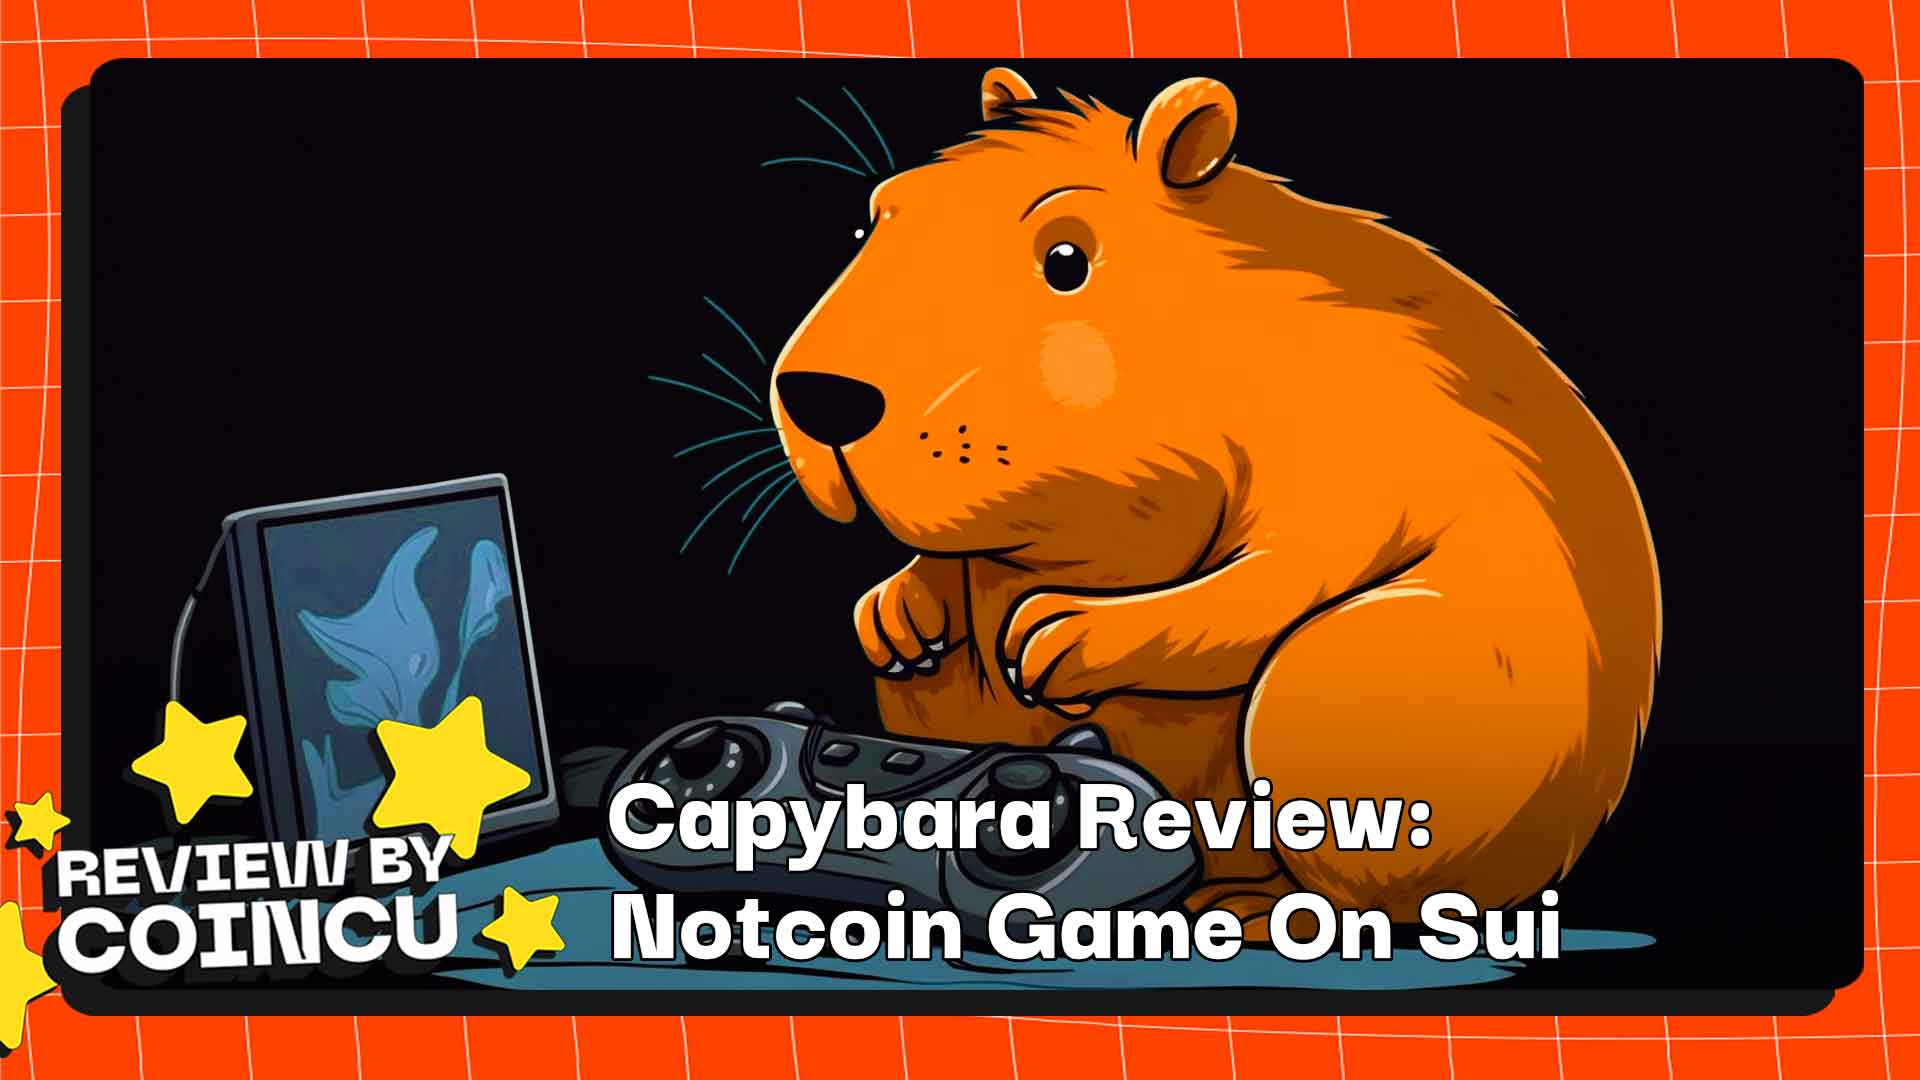 Capybara Review: Notcoin Game On Sui